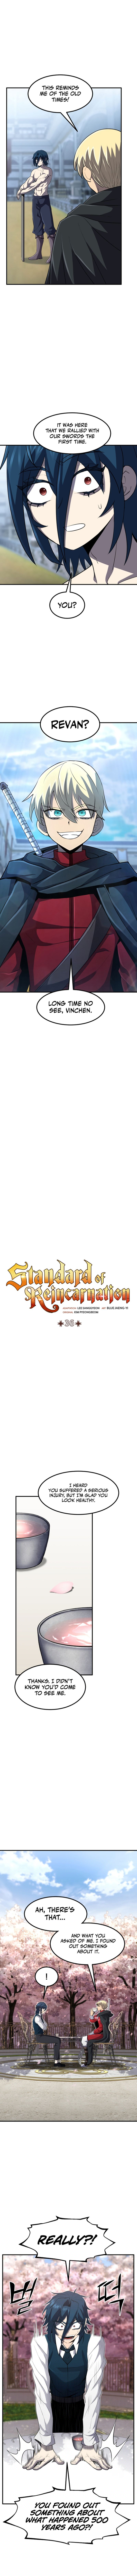 Standard Of Reincarnation - Page 2